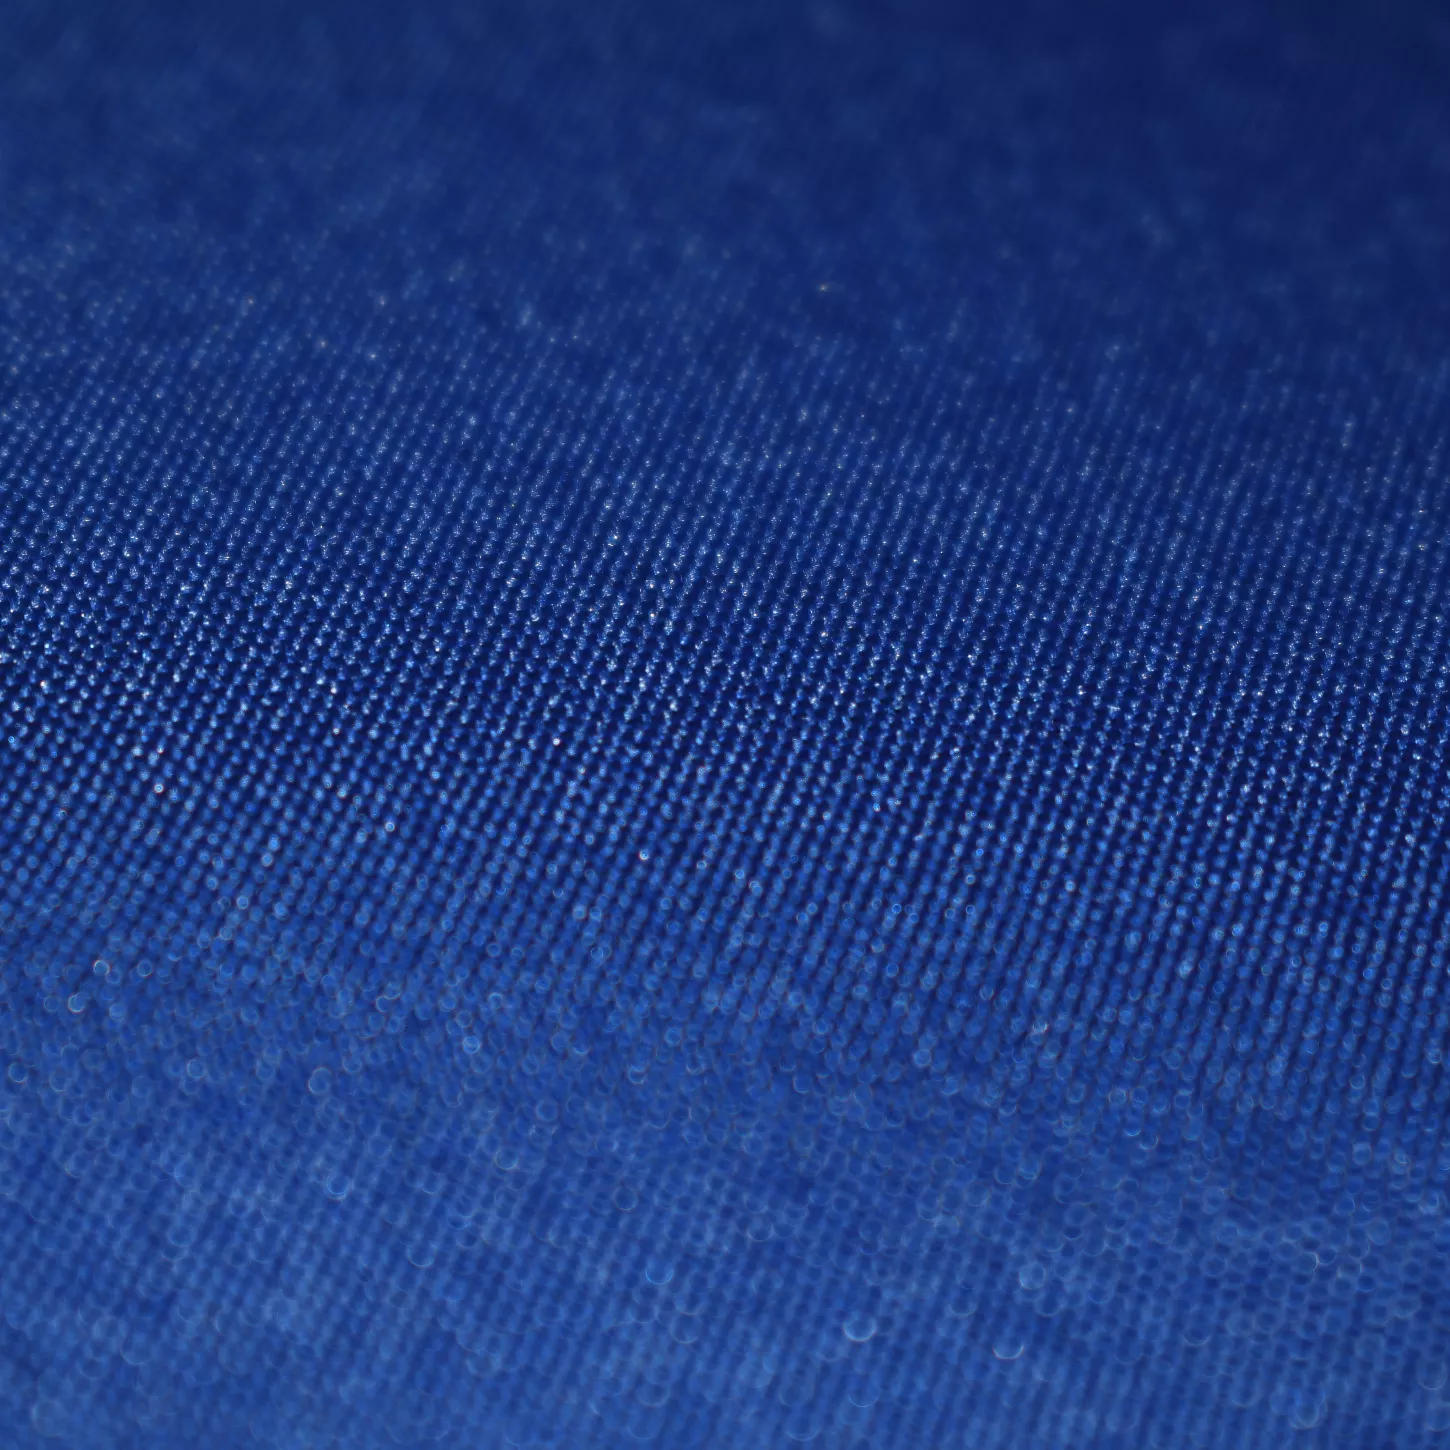 Tela seda polyester color azul rey